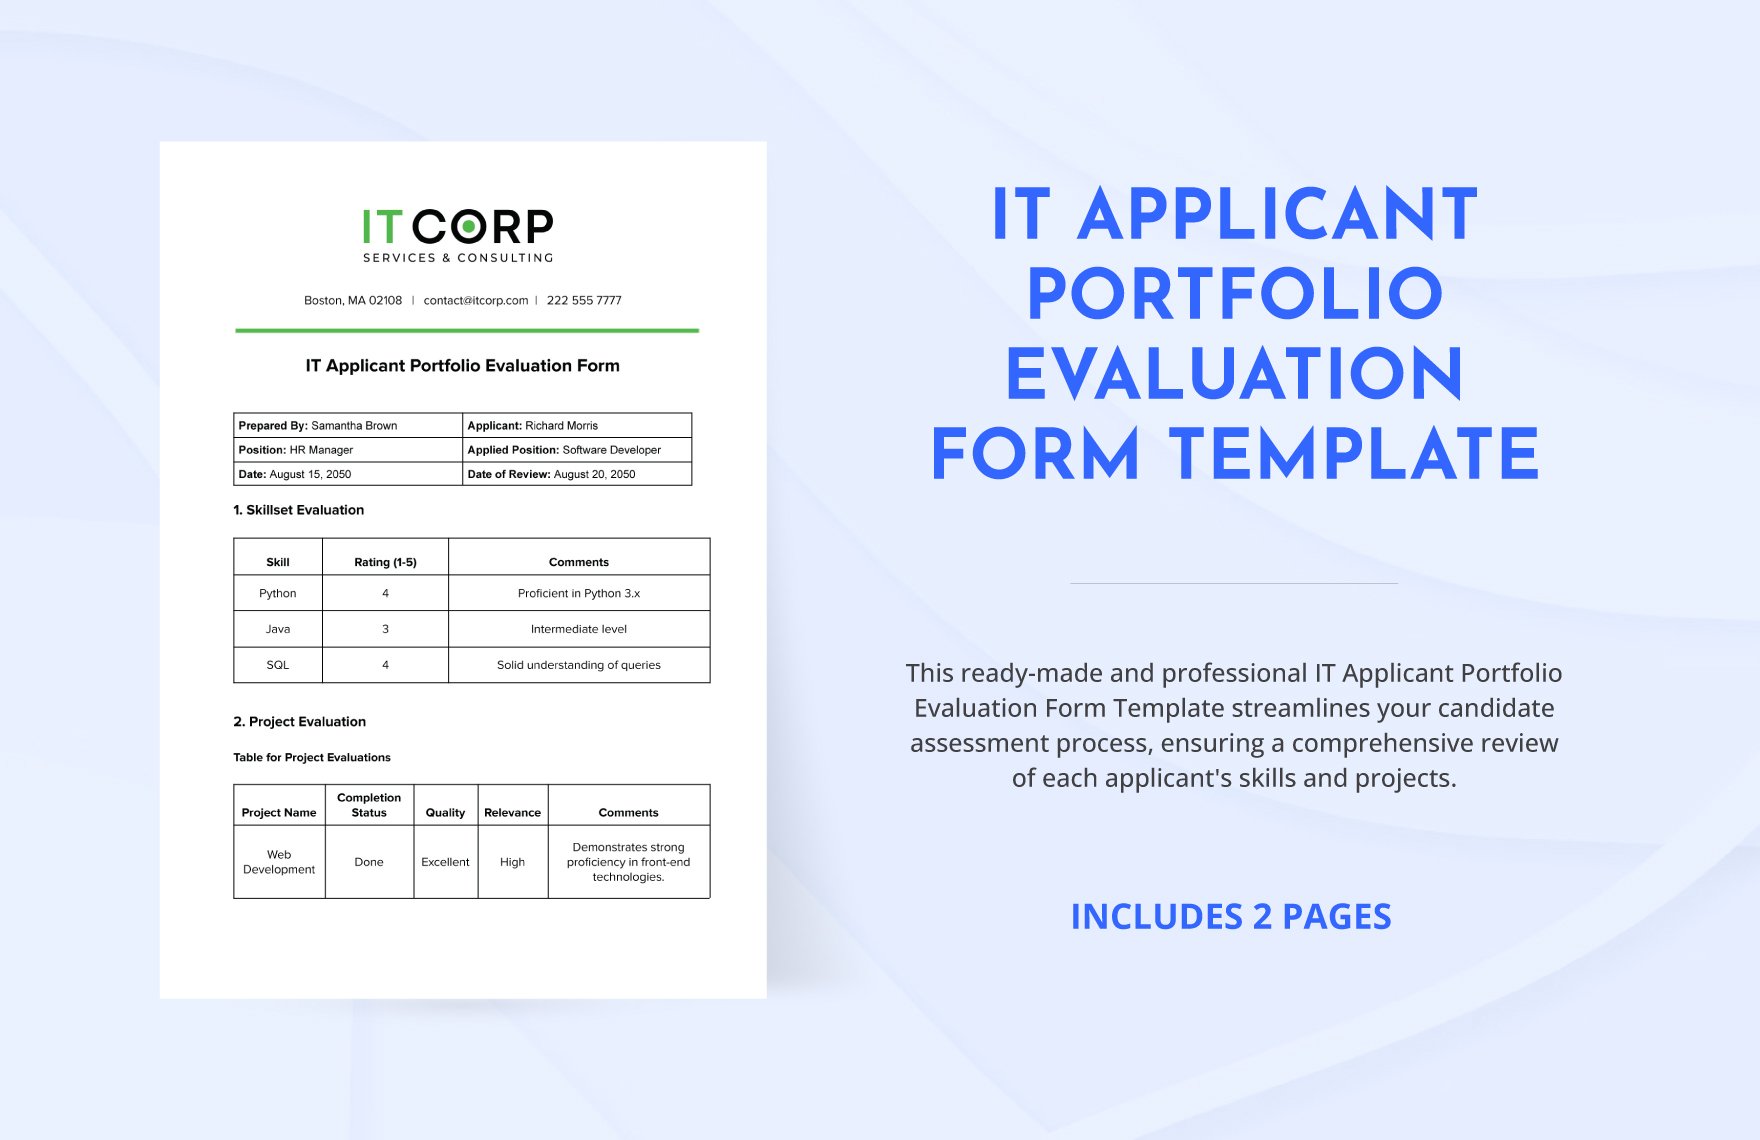 IT Applicant Portfolio Evaluation Form Template